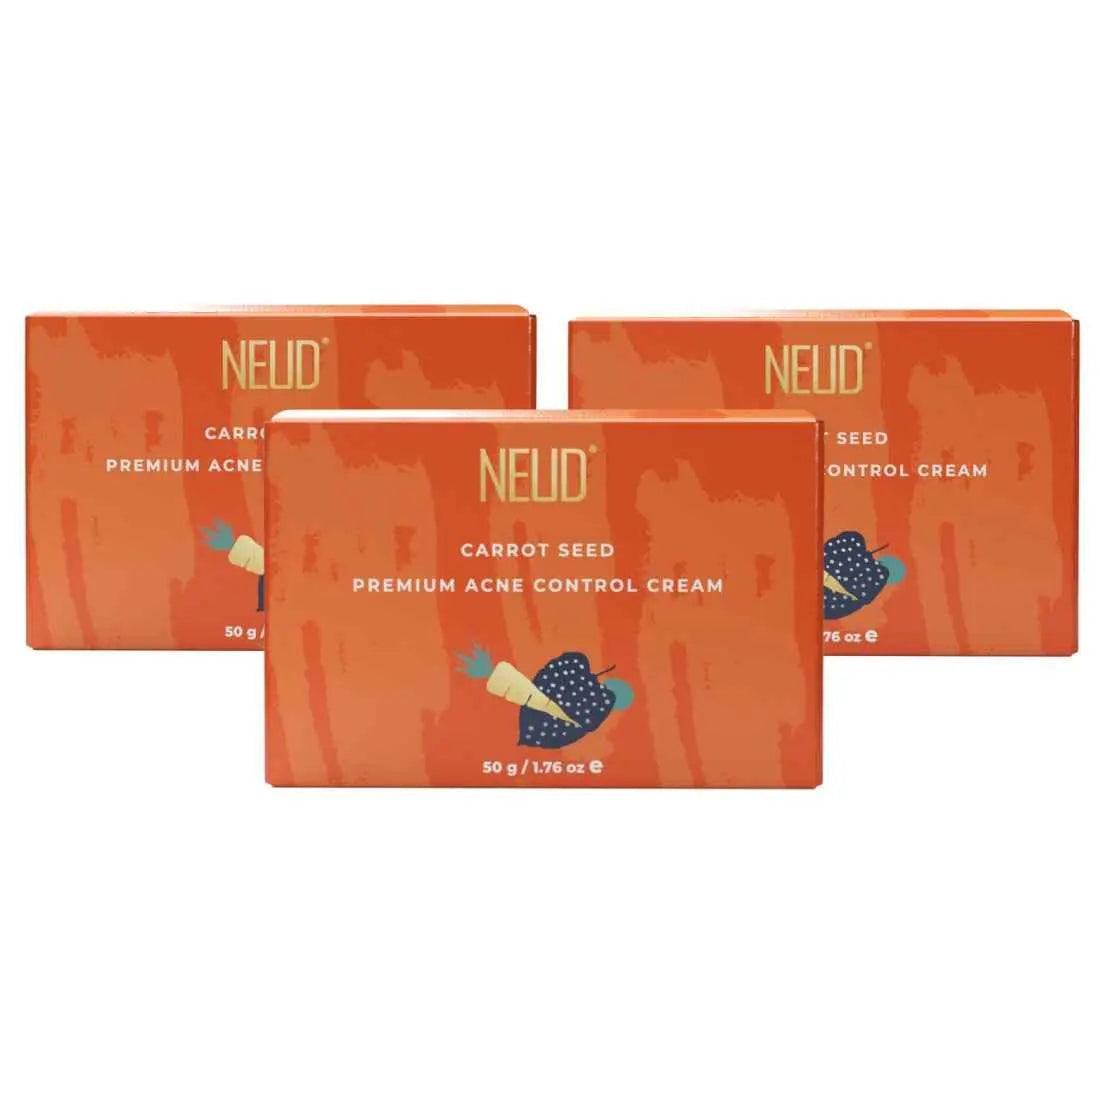 NEUD Carrot Seed Acne Control Cream for Men & Women - 50g 9559682312662